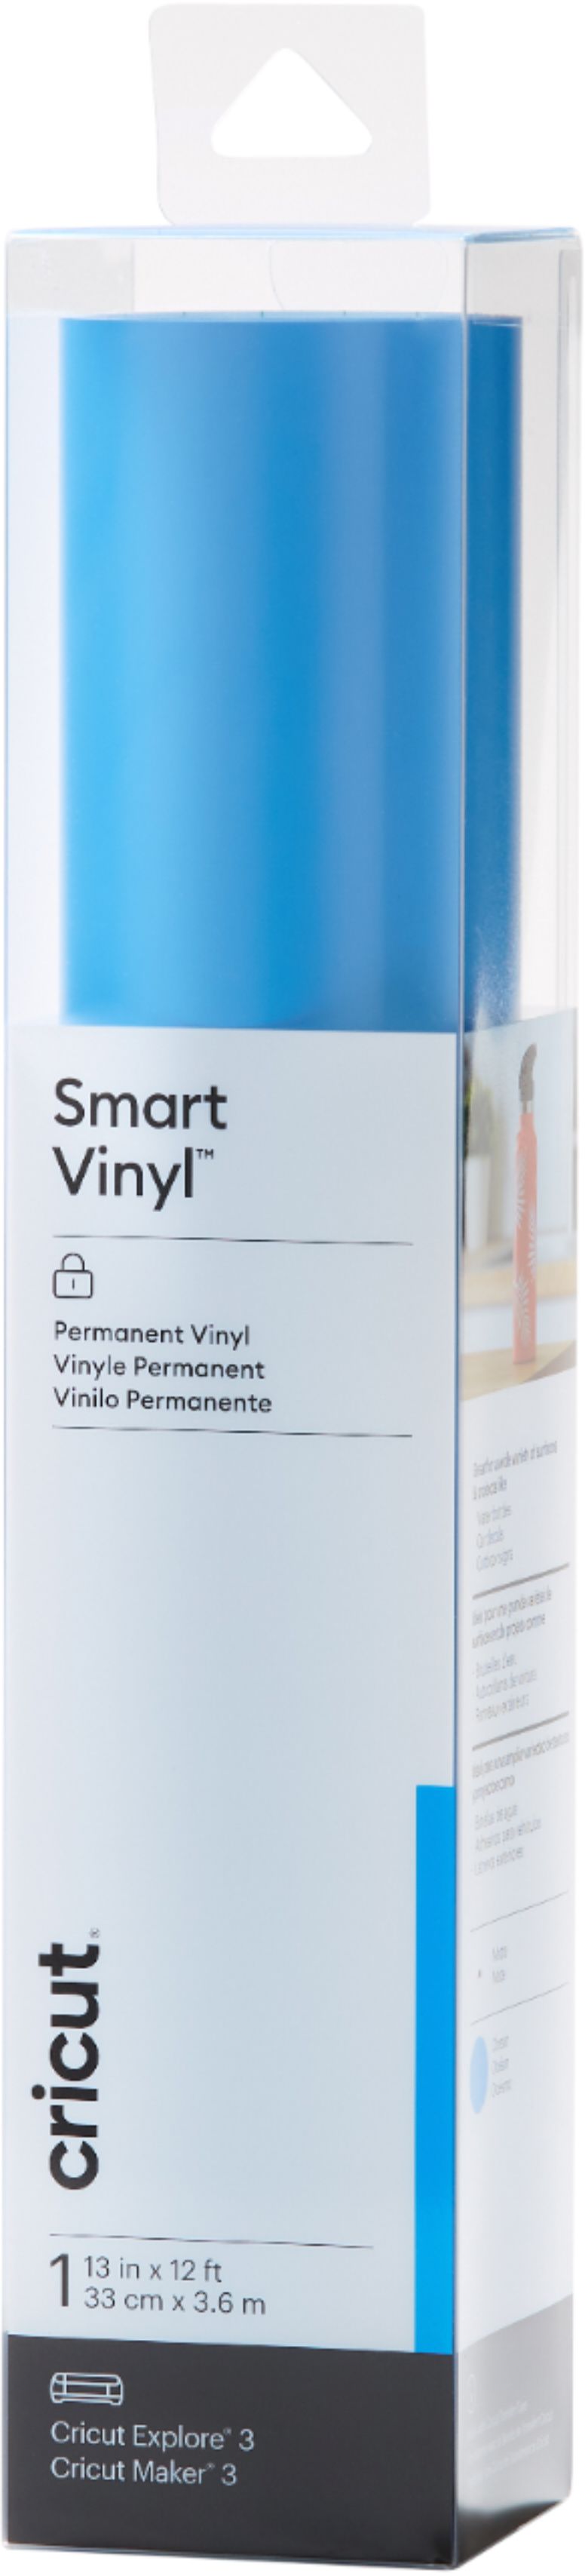 Lot of 3 Cricut Removable Smart Vinyl - White, 13 x 21 ft, Roll